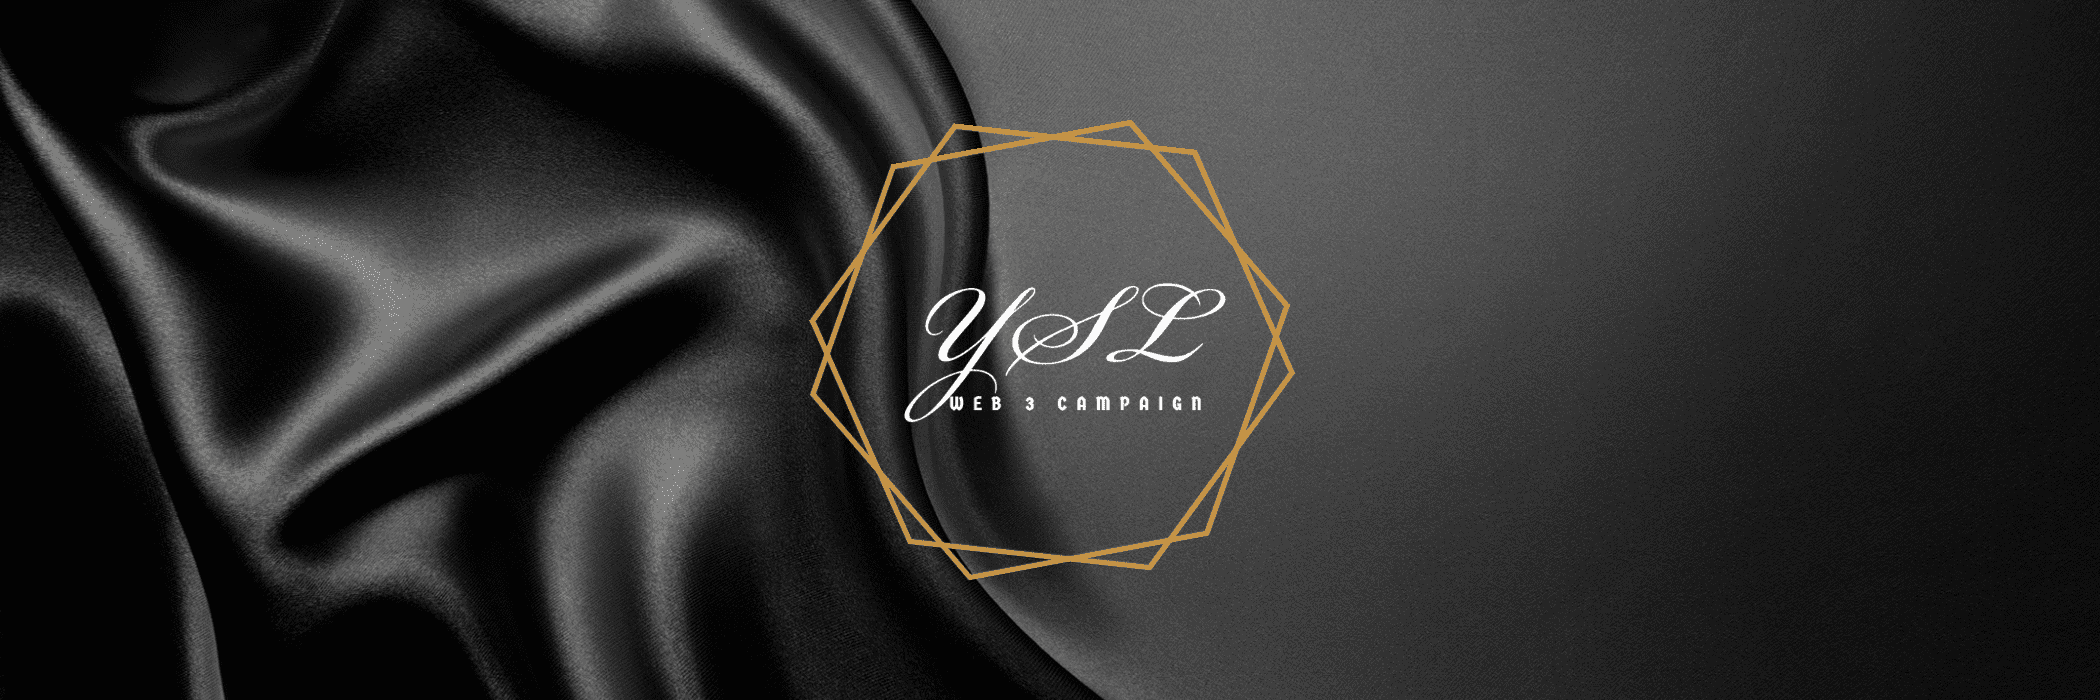 homework  Yves Saint Laurent  YSL Parfums  YSL Love event concept 2018  proposal